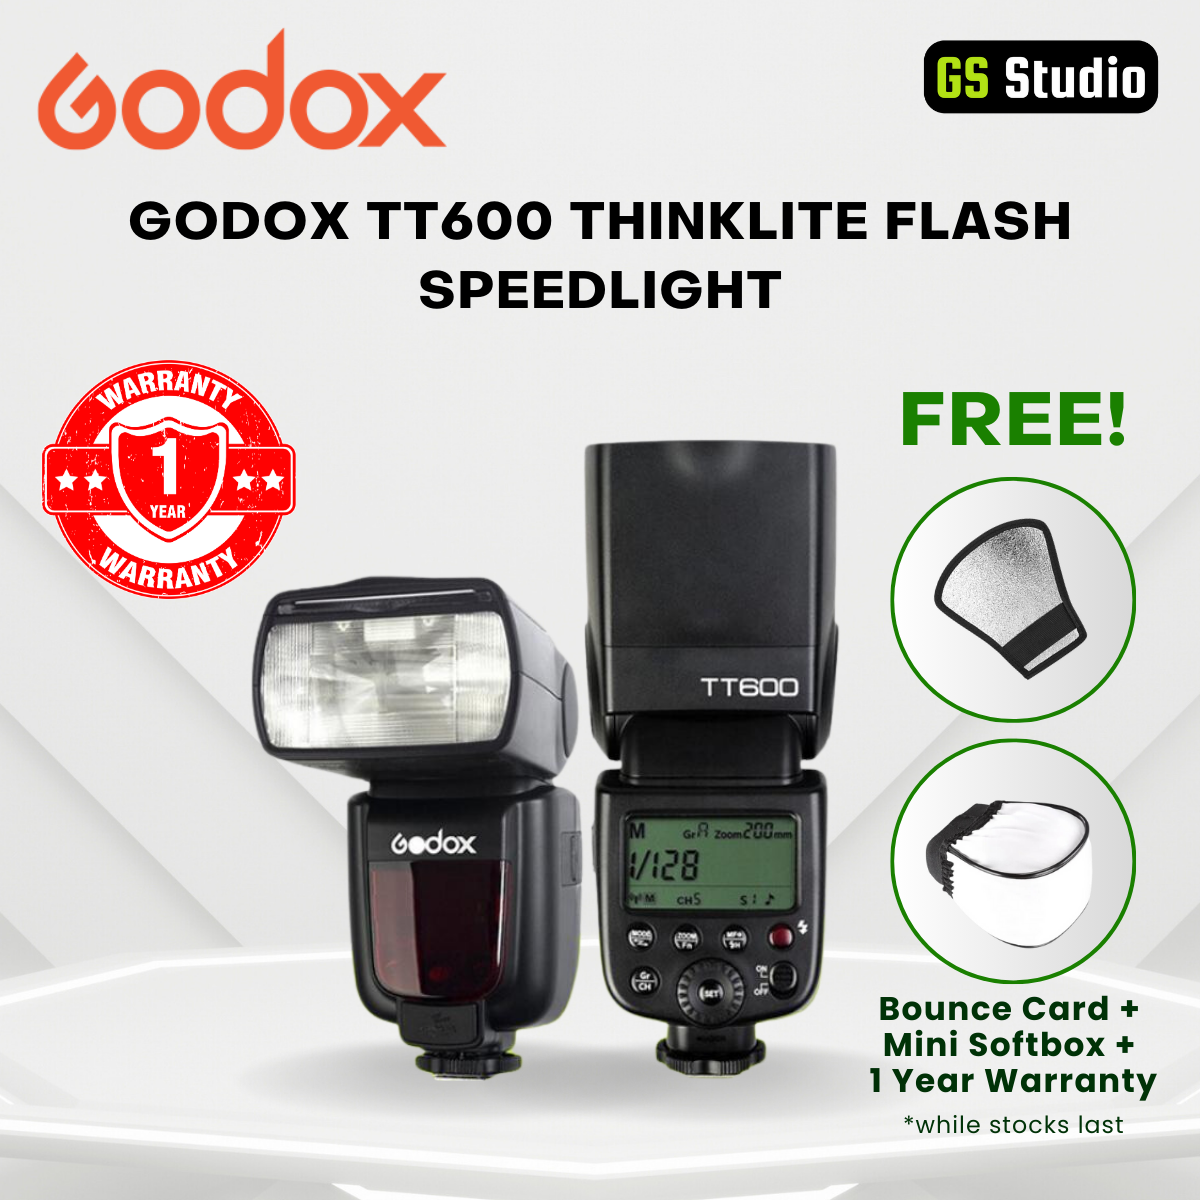 GODOX TT600 THINKLITE FLASH 2.4G WIRELESS CAMERA FLASH SPEEDLITE FOR CANON NIKON SONY FUJI